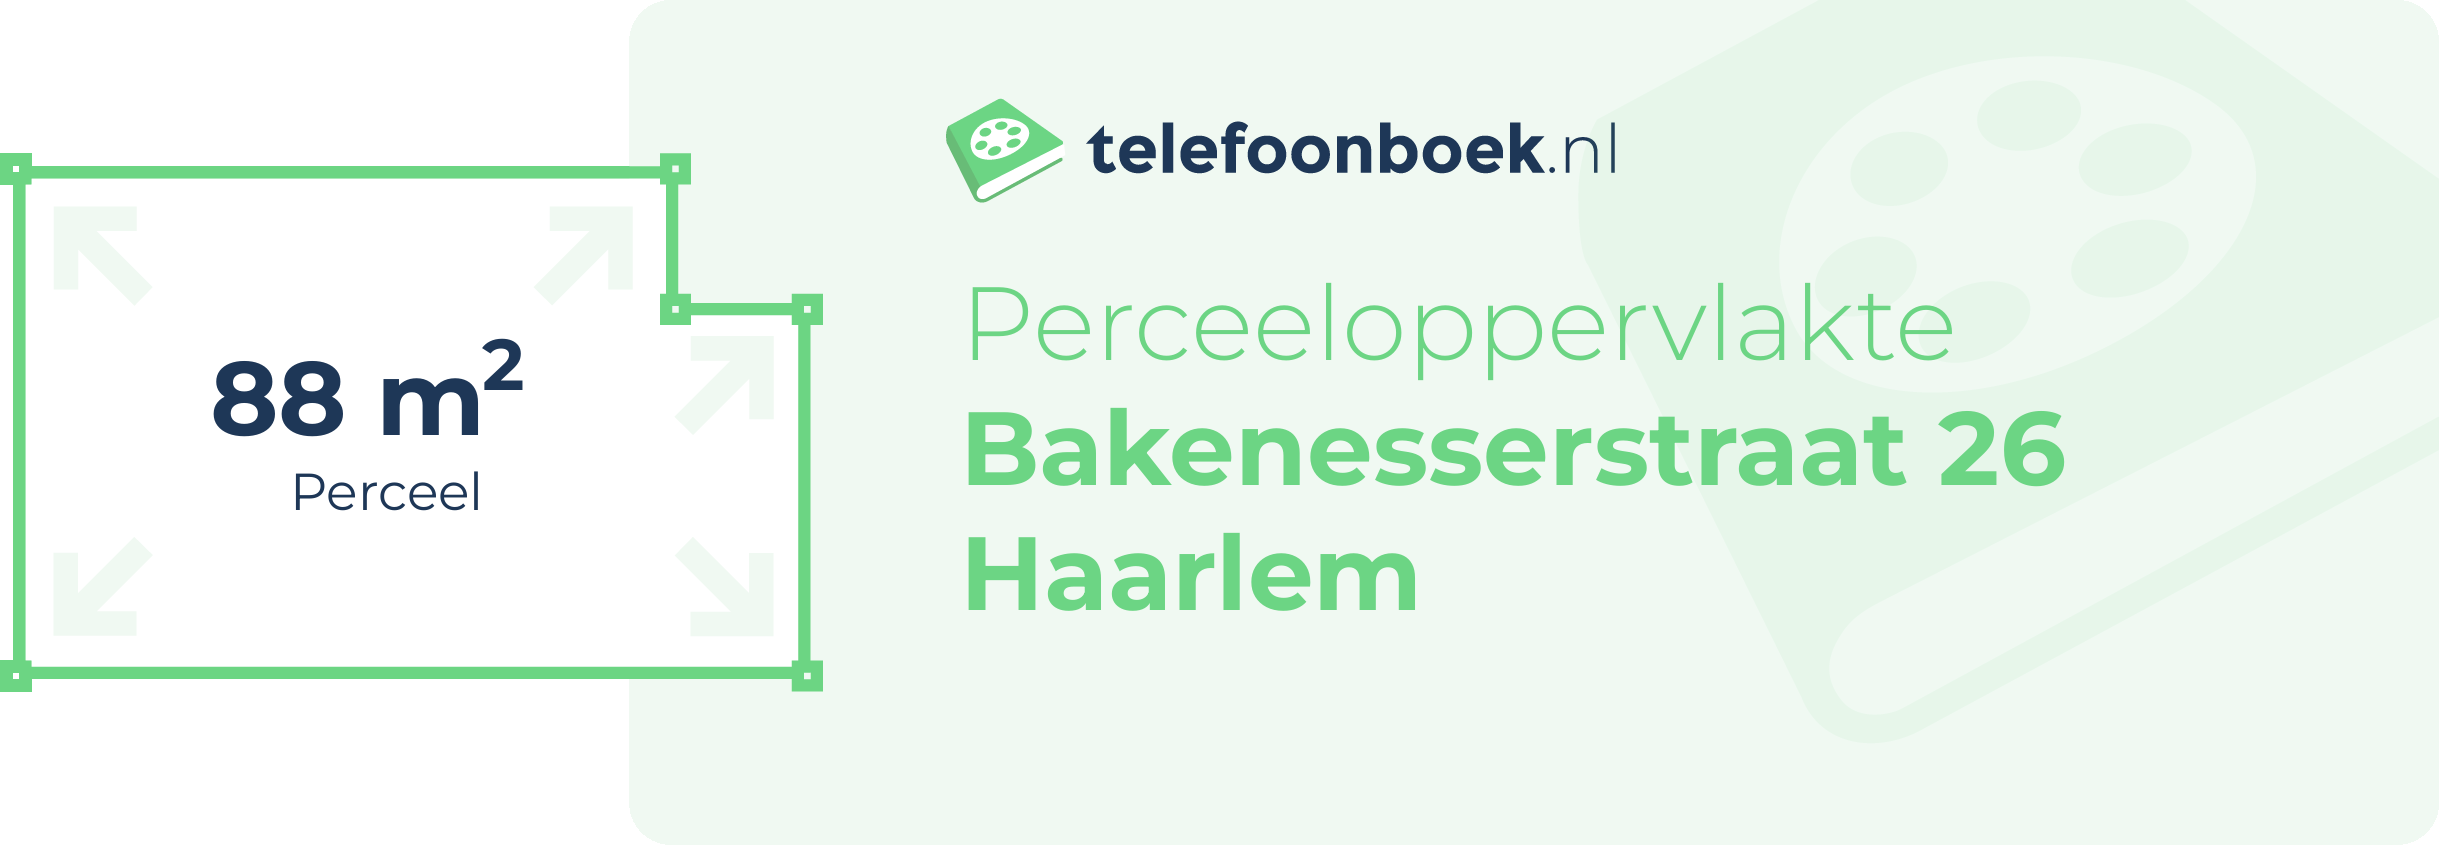 Perceeloppervlakte Bakenesserstraat 26 Haarlem